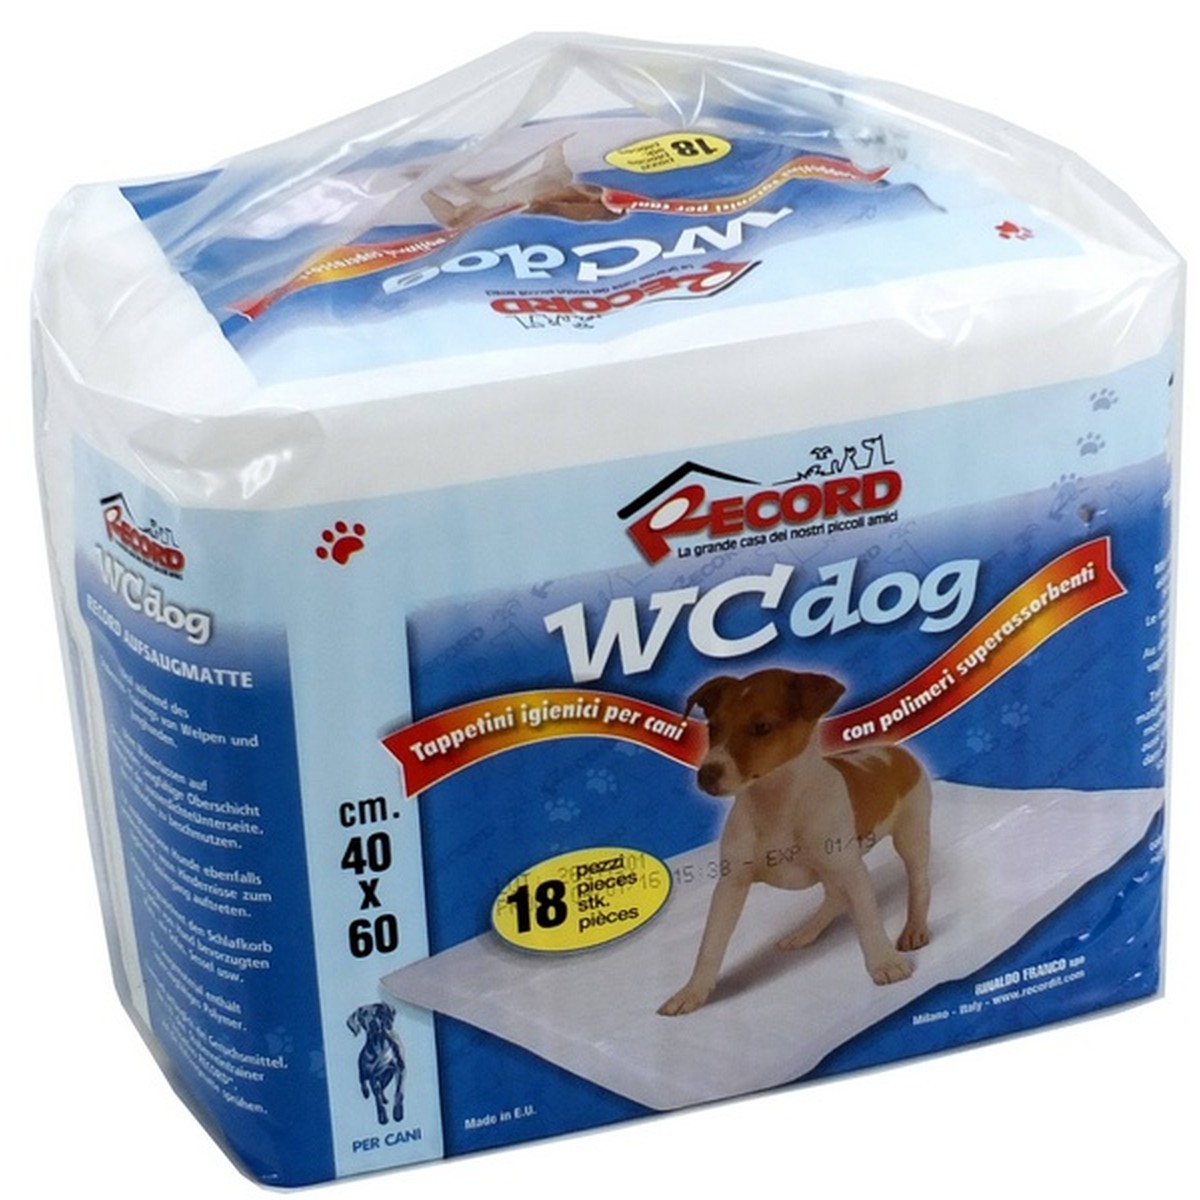   Tapis absorbants WC-dog 60x40cm(18 pces)  60x40cm